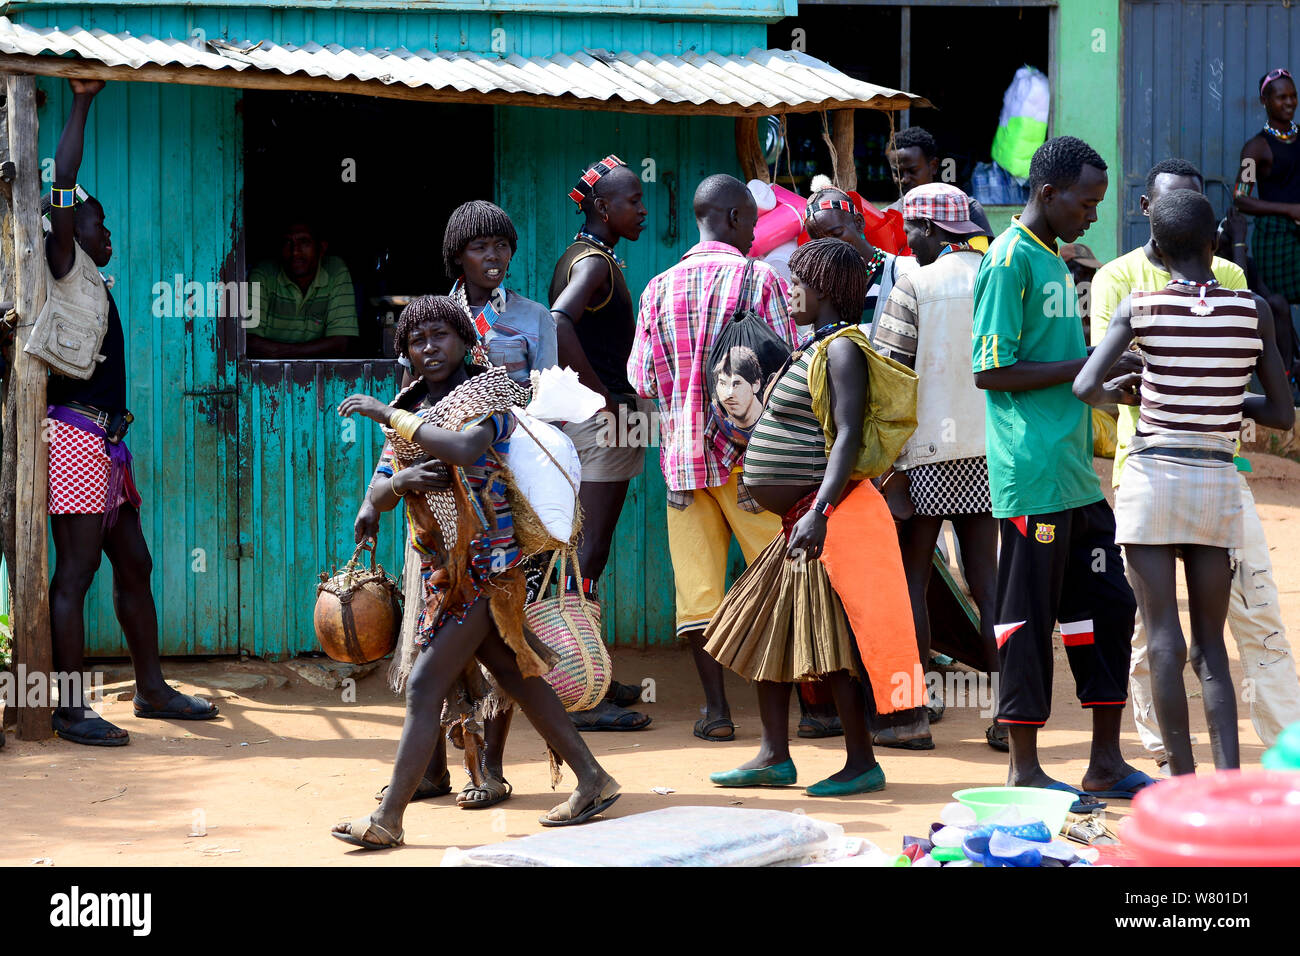 Banna people in Key Afar market. Ethiopia, November 2014 Stock Photo